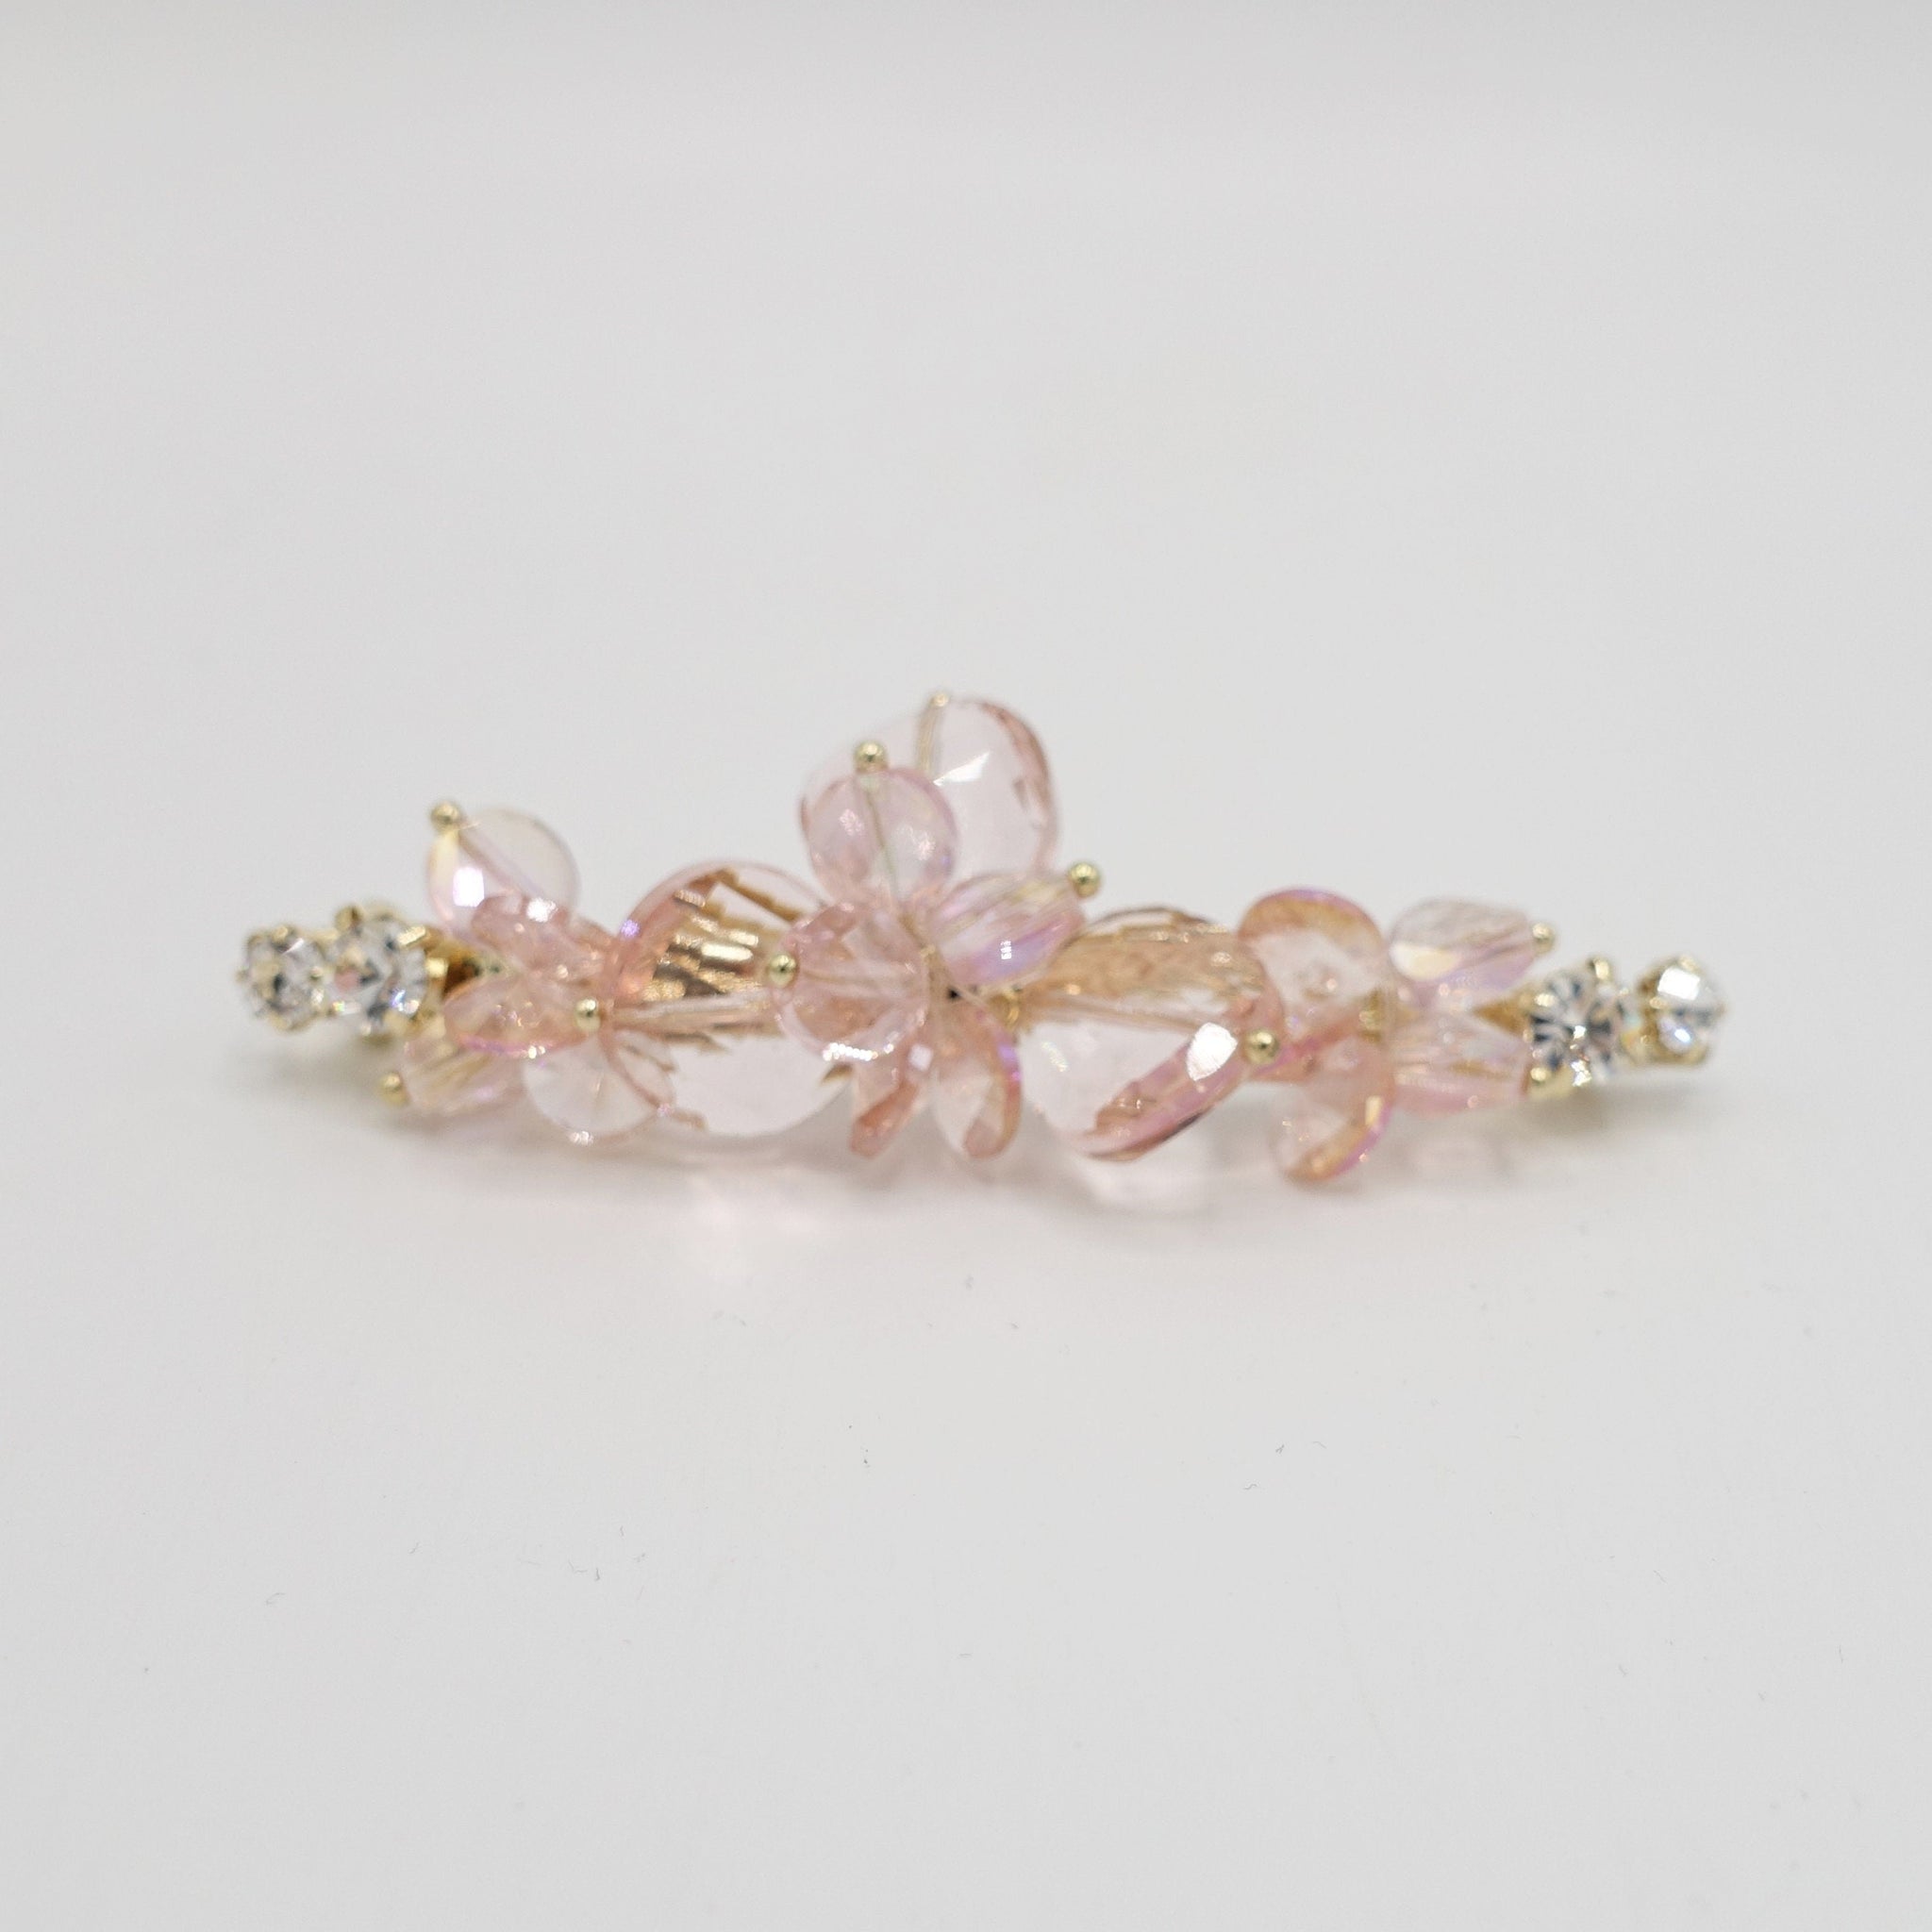 veryshine.com Barrette (Bow) Vintage rose crystal glass beaded hair barrette